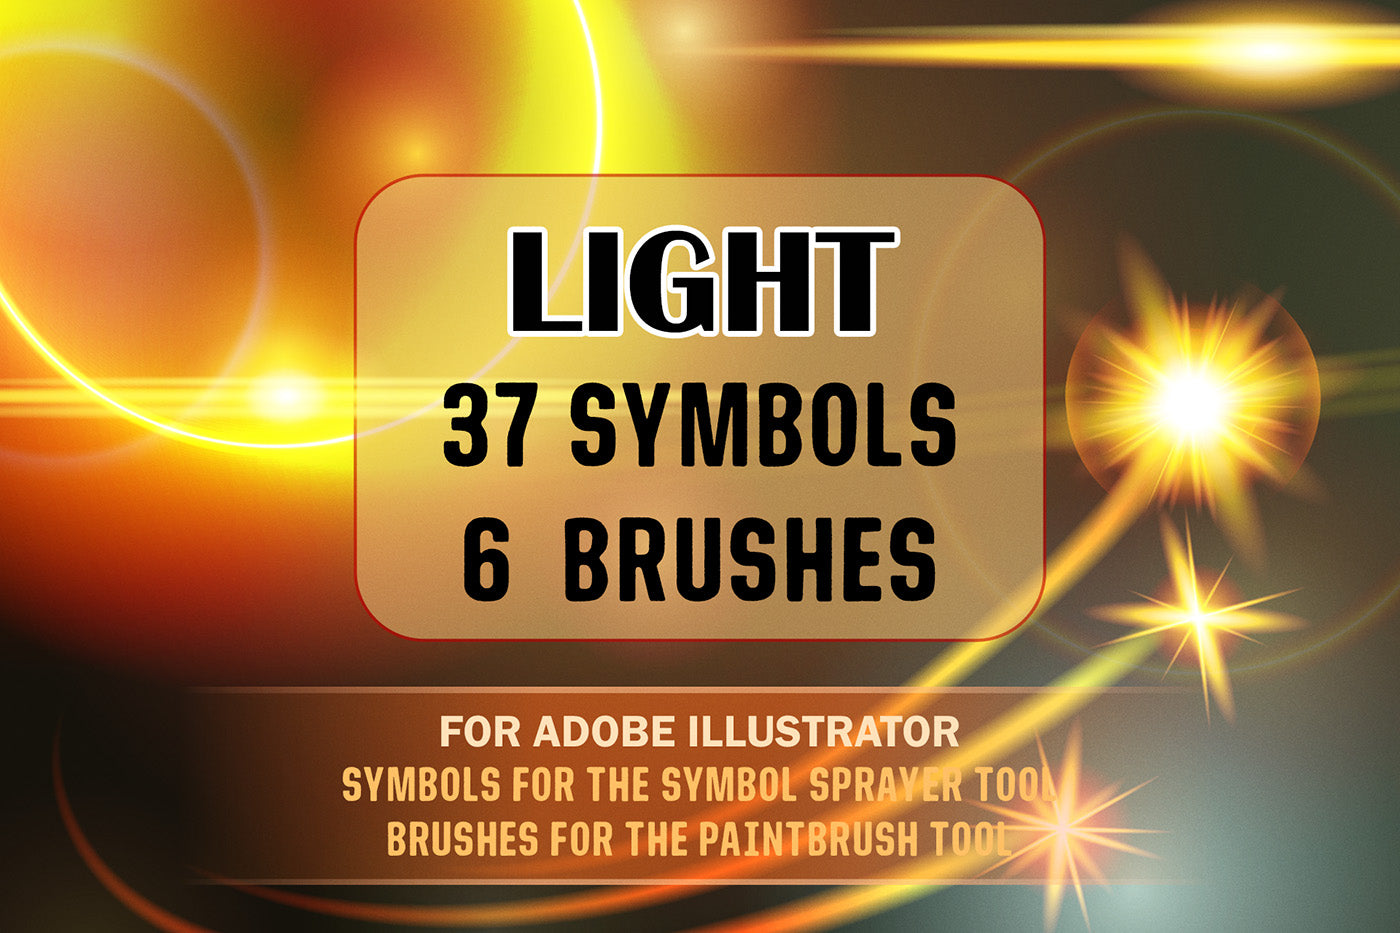 Bundle - Stars - Light - Bokeh Brushes and Symbols for Adobe Illustrator